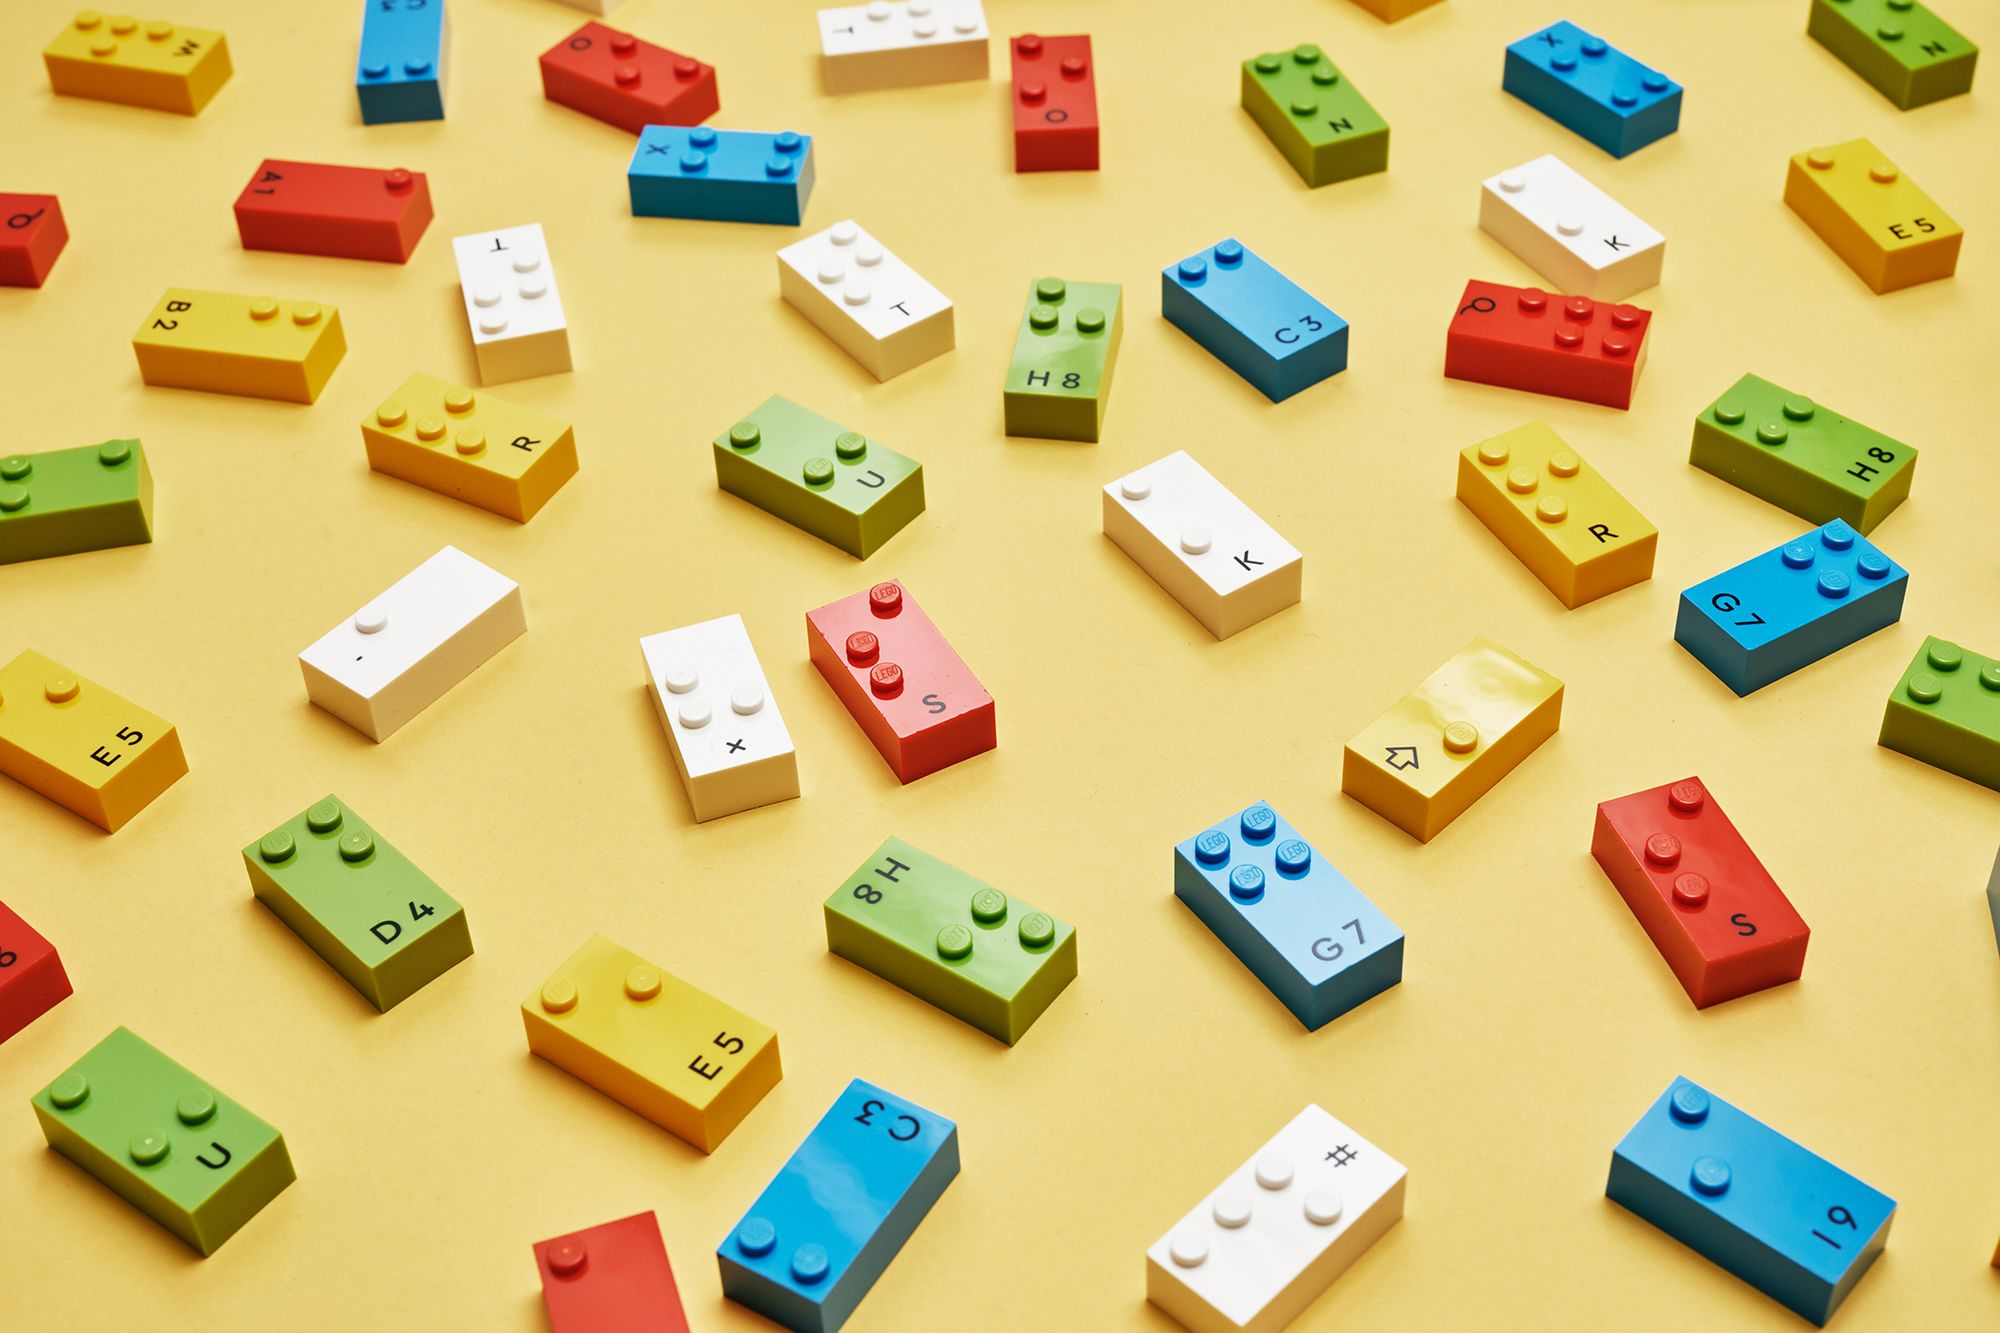 LEGO is Braille blocks now | CNN Business